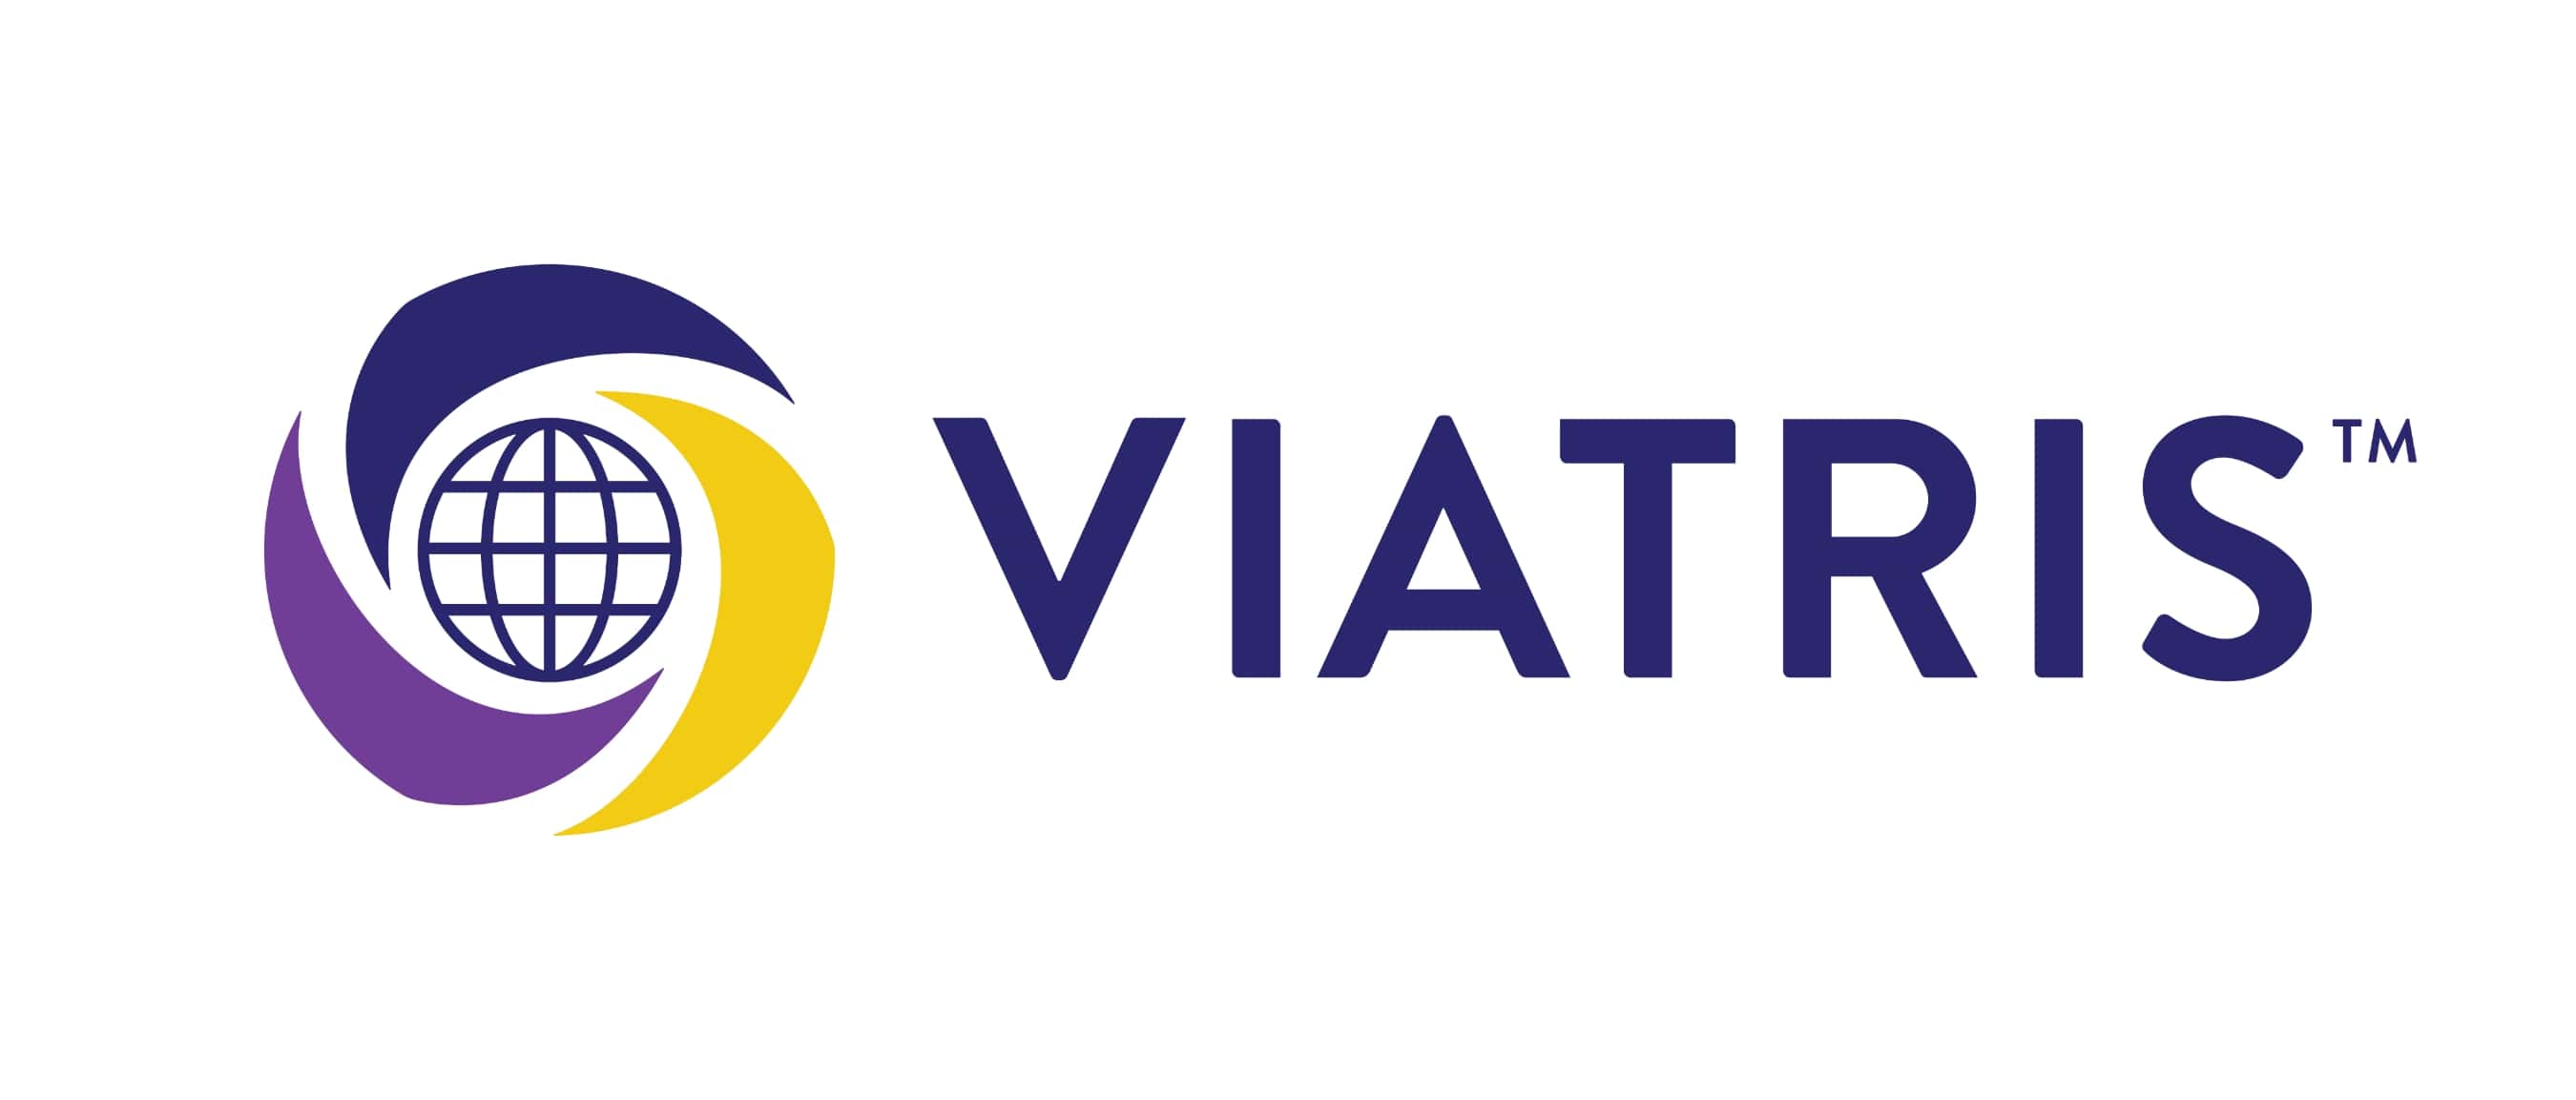 Viatris Inc